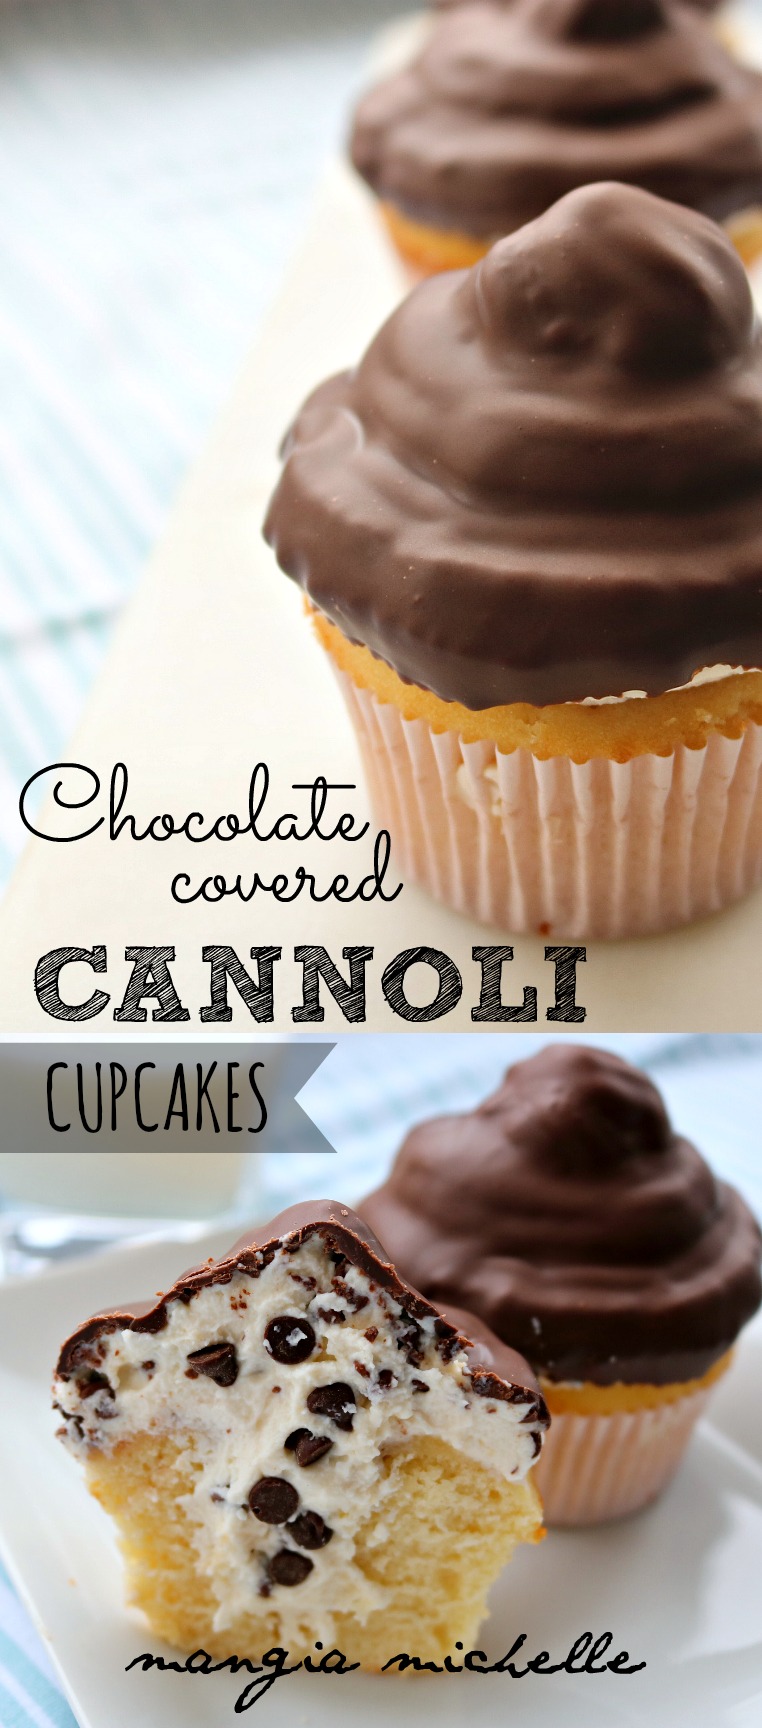 Čokoládové Cannoli Cupcakes